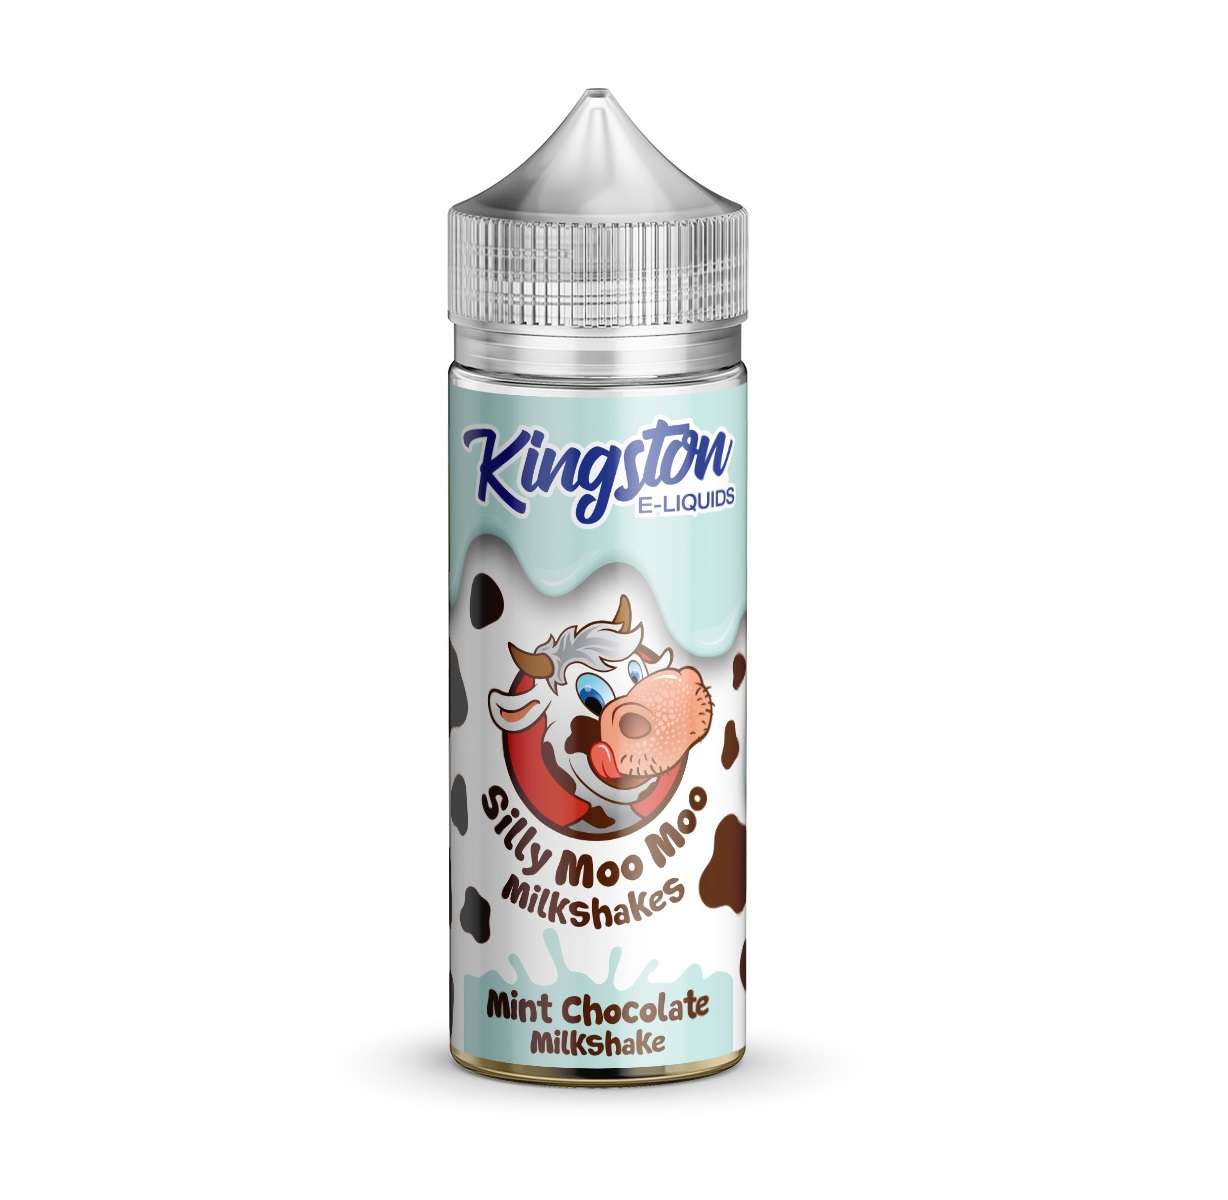  Kingston Silly Moo Moo Milkshake - Mint Chocolate - 100ml 